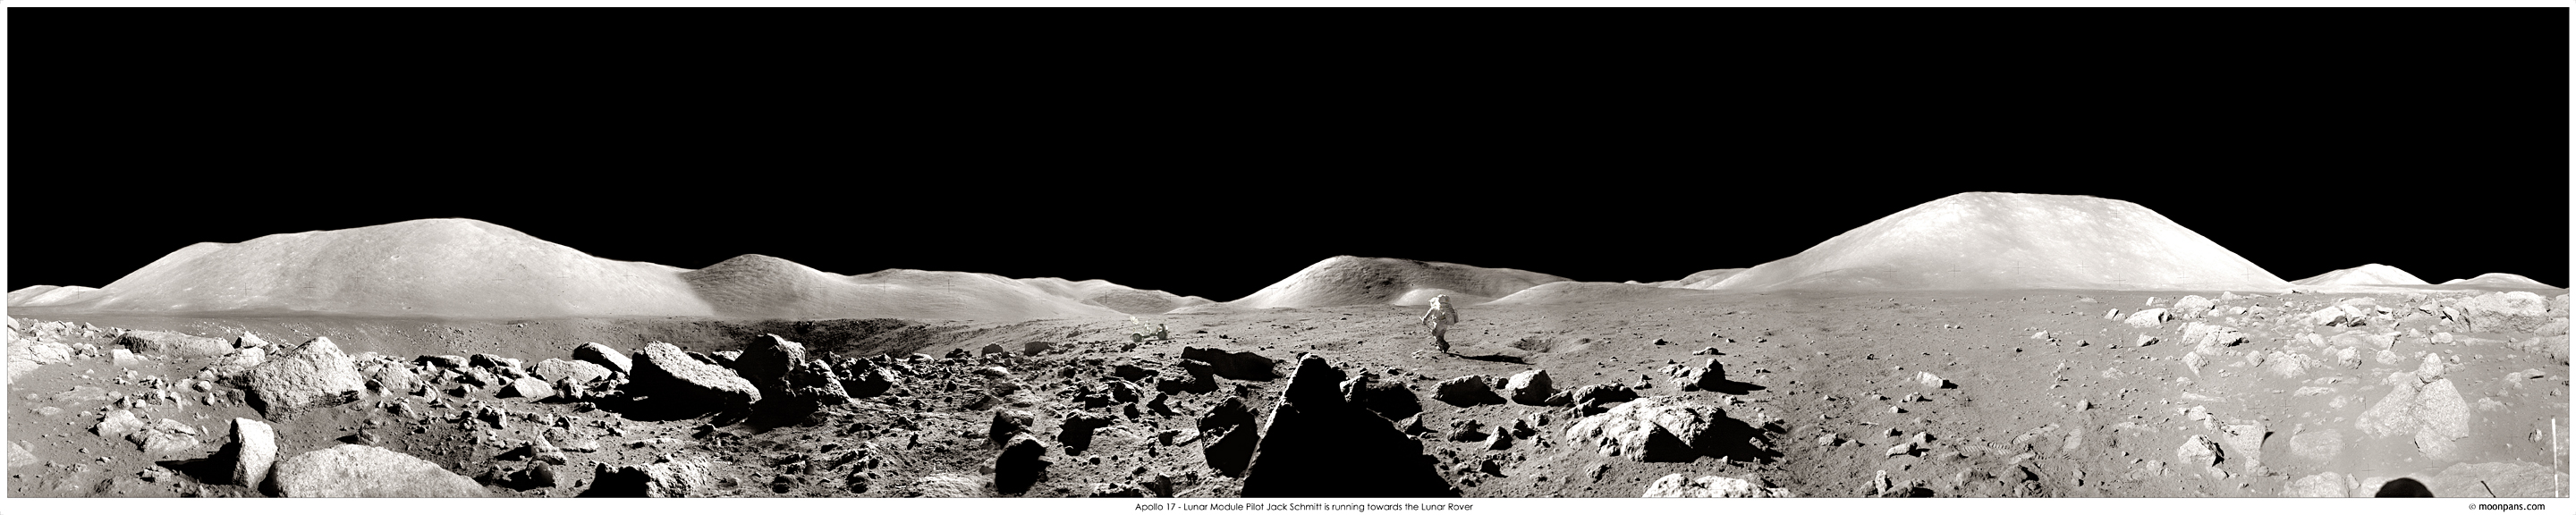 Панорама с Аполлона-17: бегущий астронавт